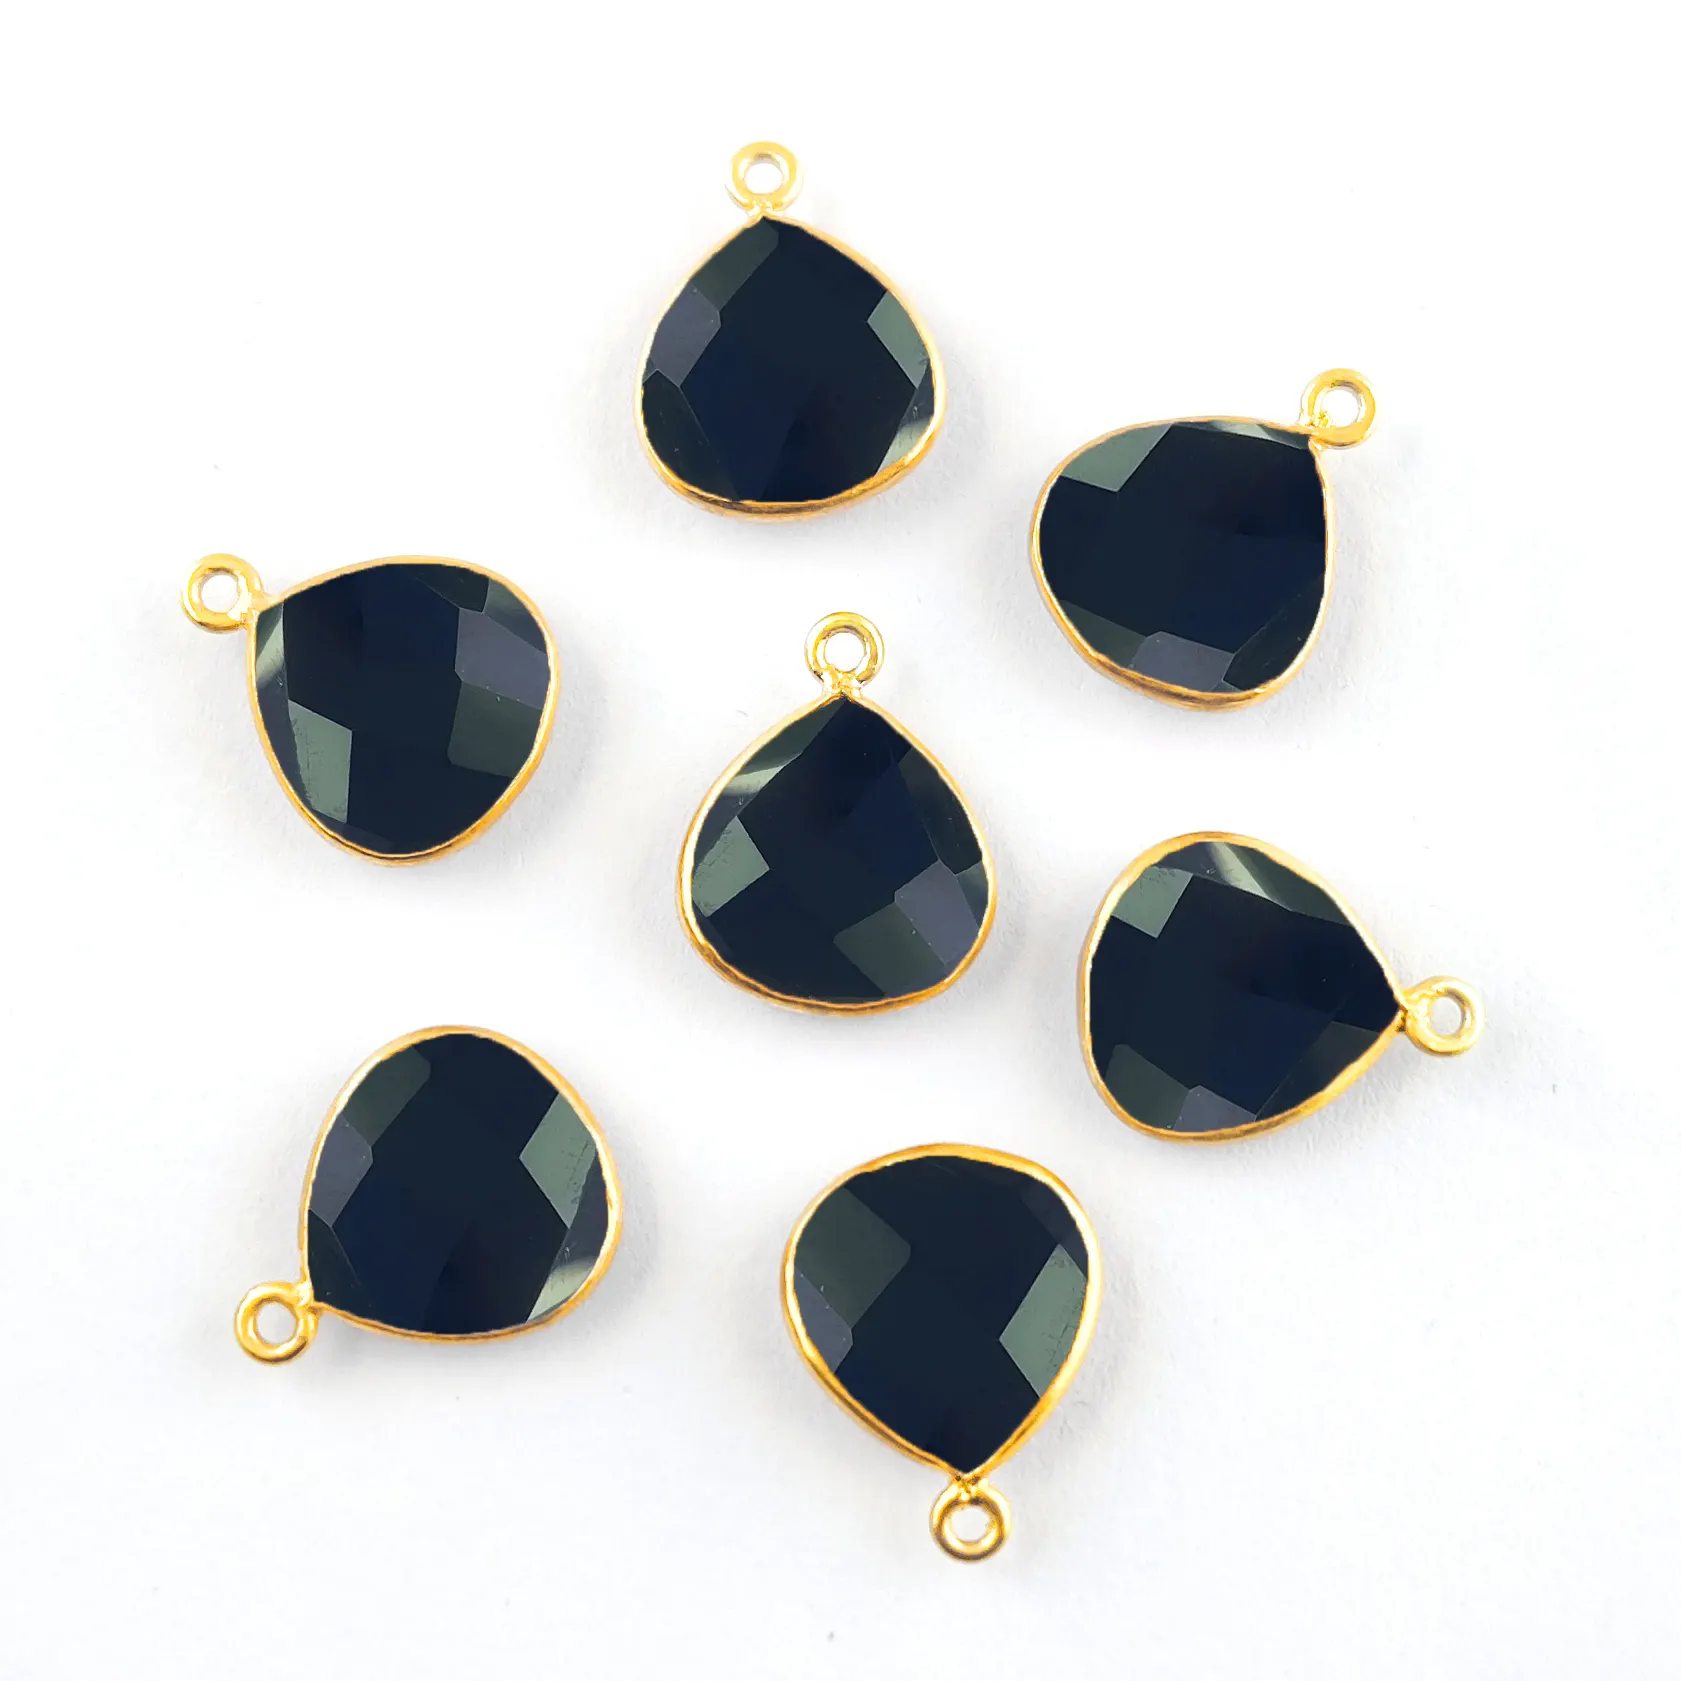 Wholesale Black Onyx Heart Shape 12mm Gold Vermeil 925 Sterling Silver Bezel Set Pendant For Making Jewelry